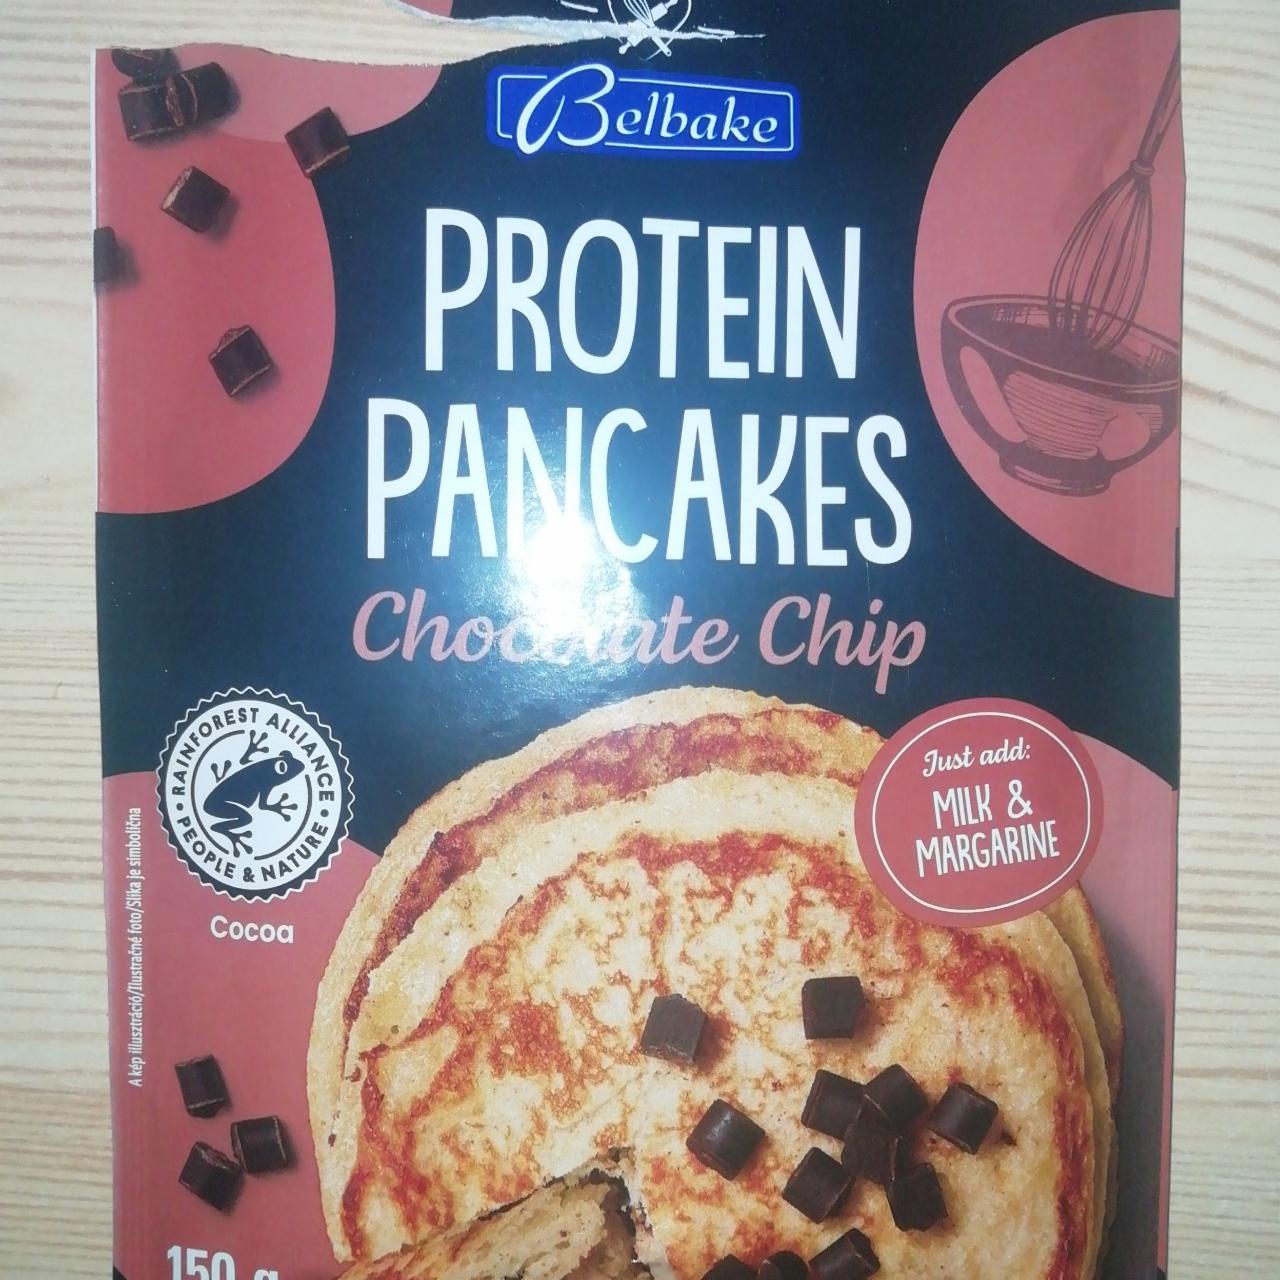 Képek - Protein Pancakes Chocolate Chip Belbake